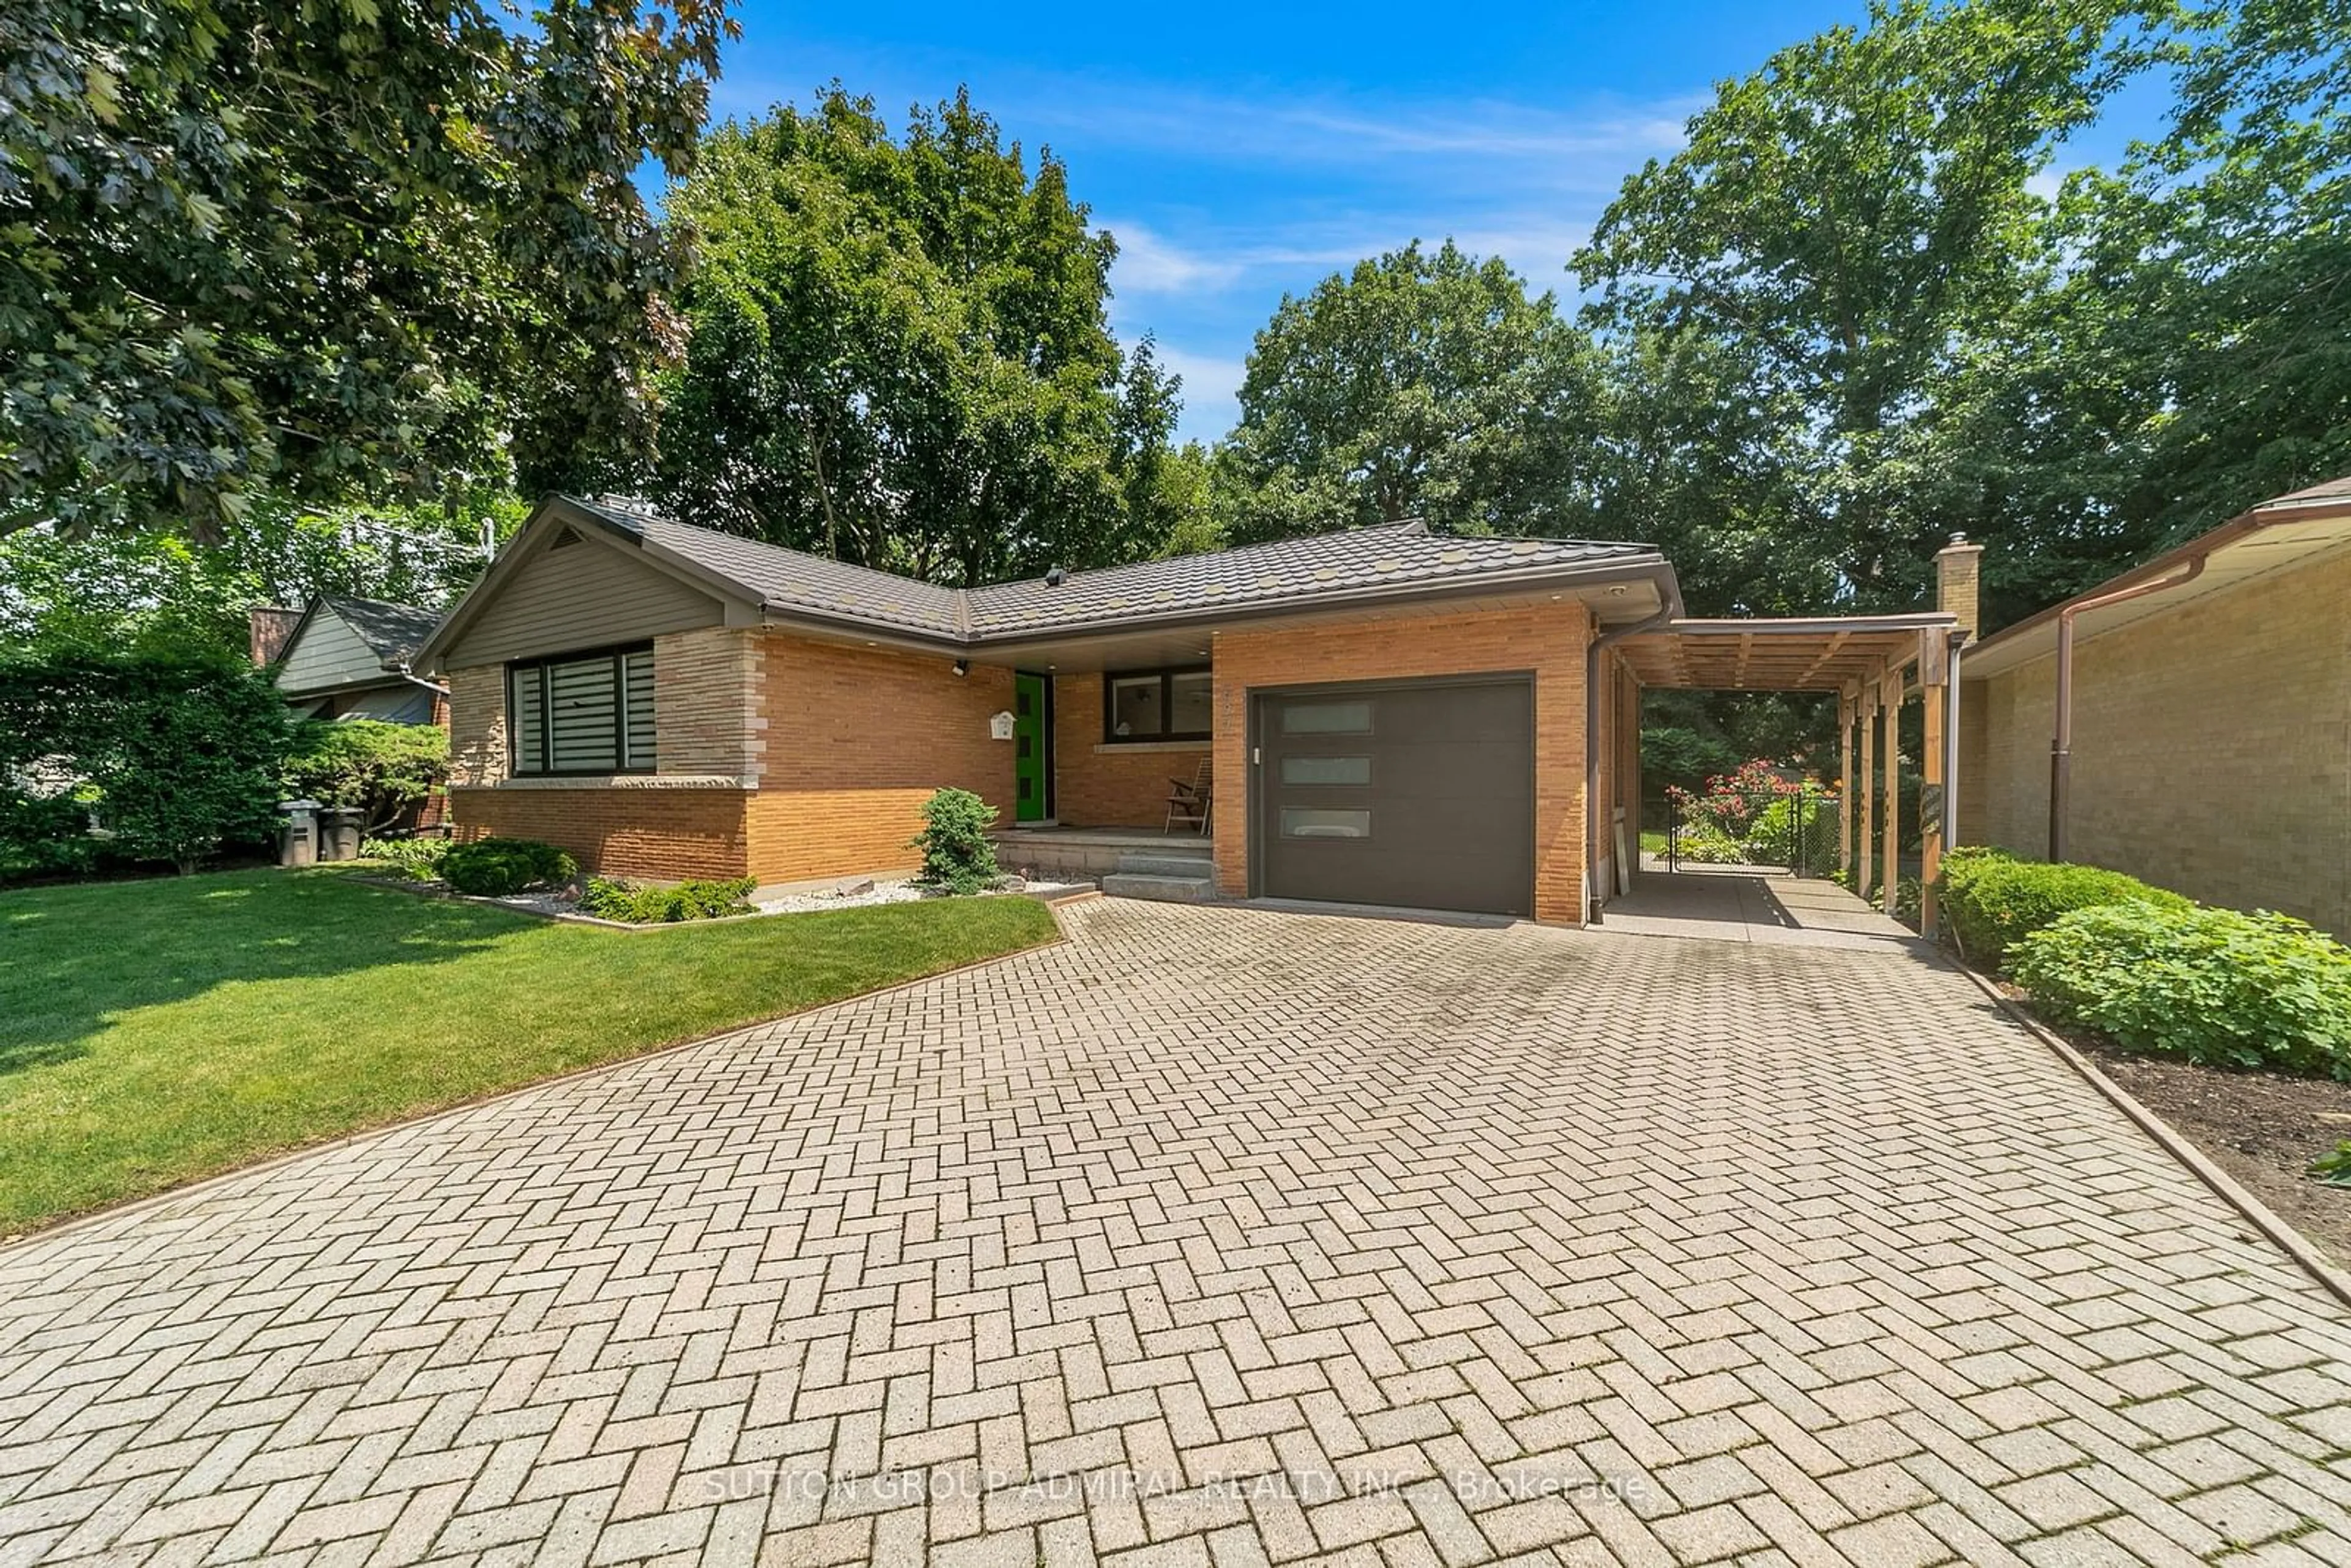 Home with brick exterior material for 697 George St, Burlington Ontario L7R 2V8